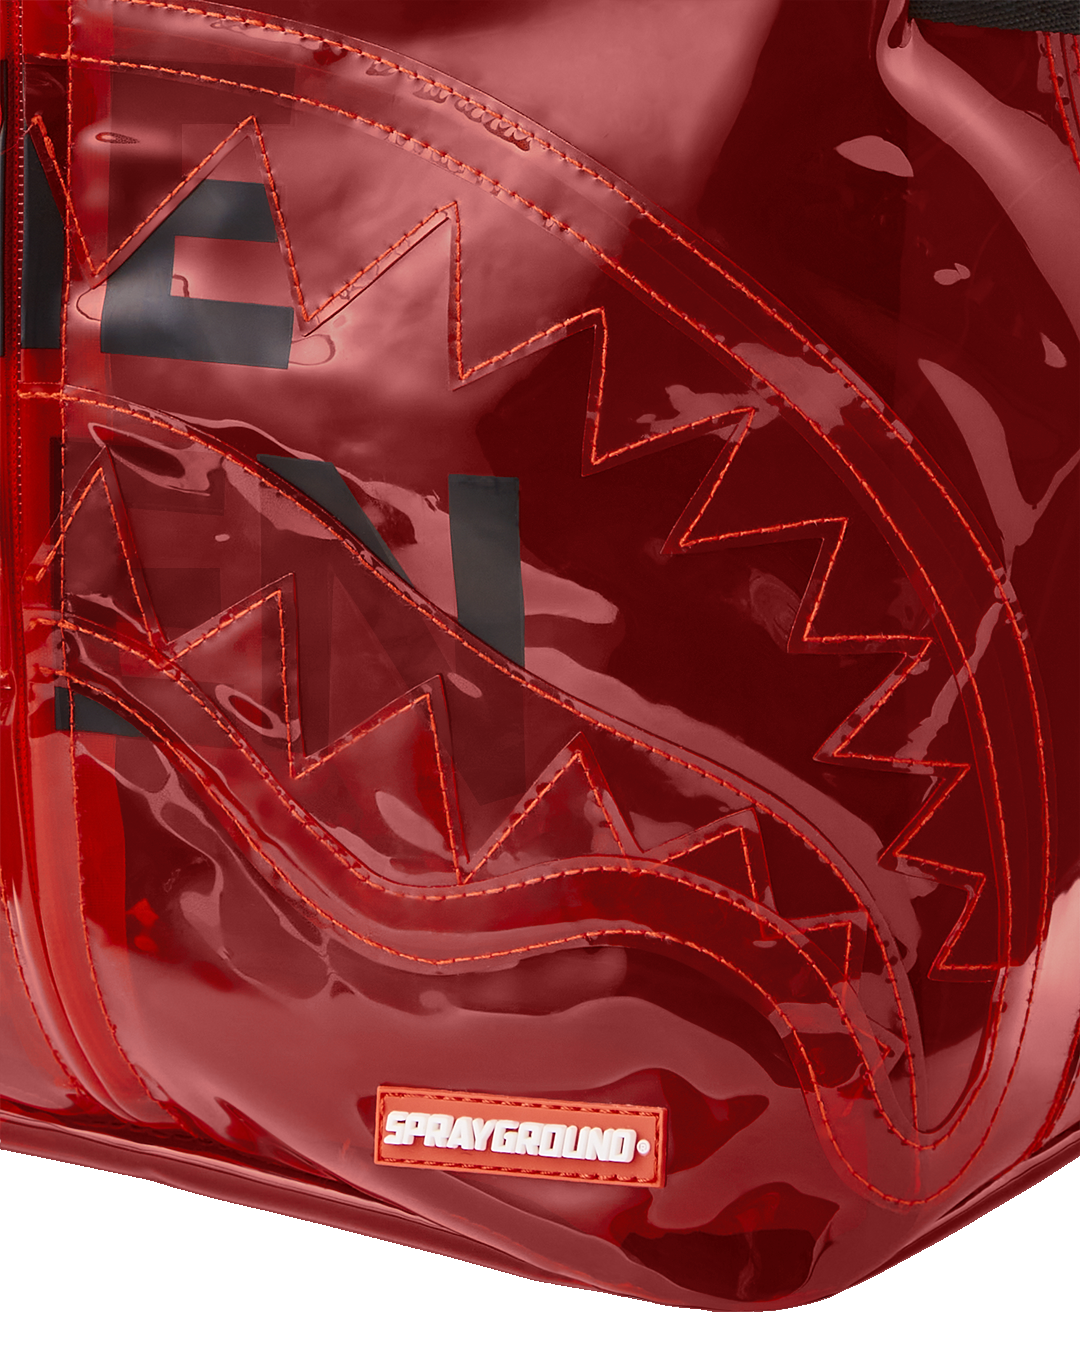 Sprayground - Rip Me Open DLX Backpack (Red) – Octane